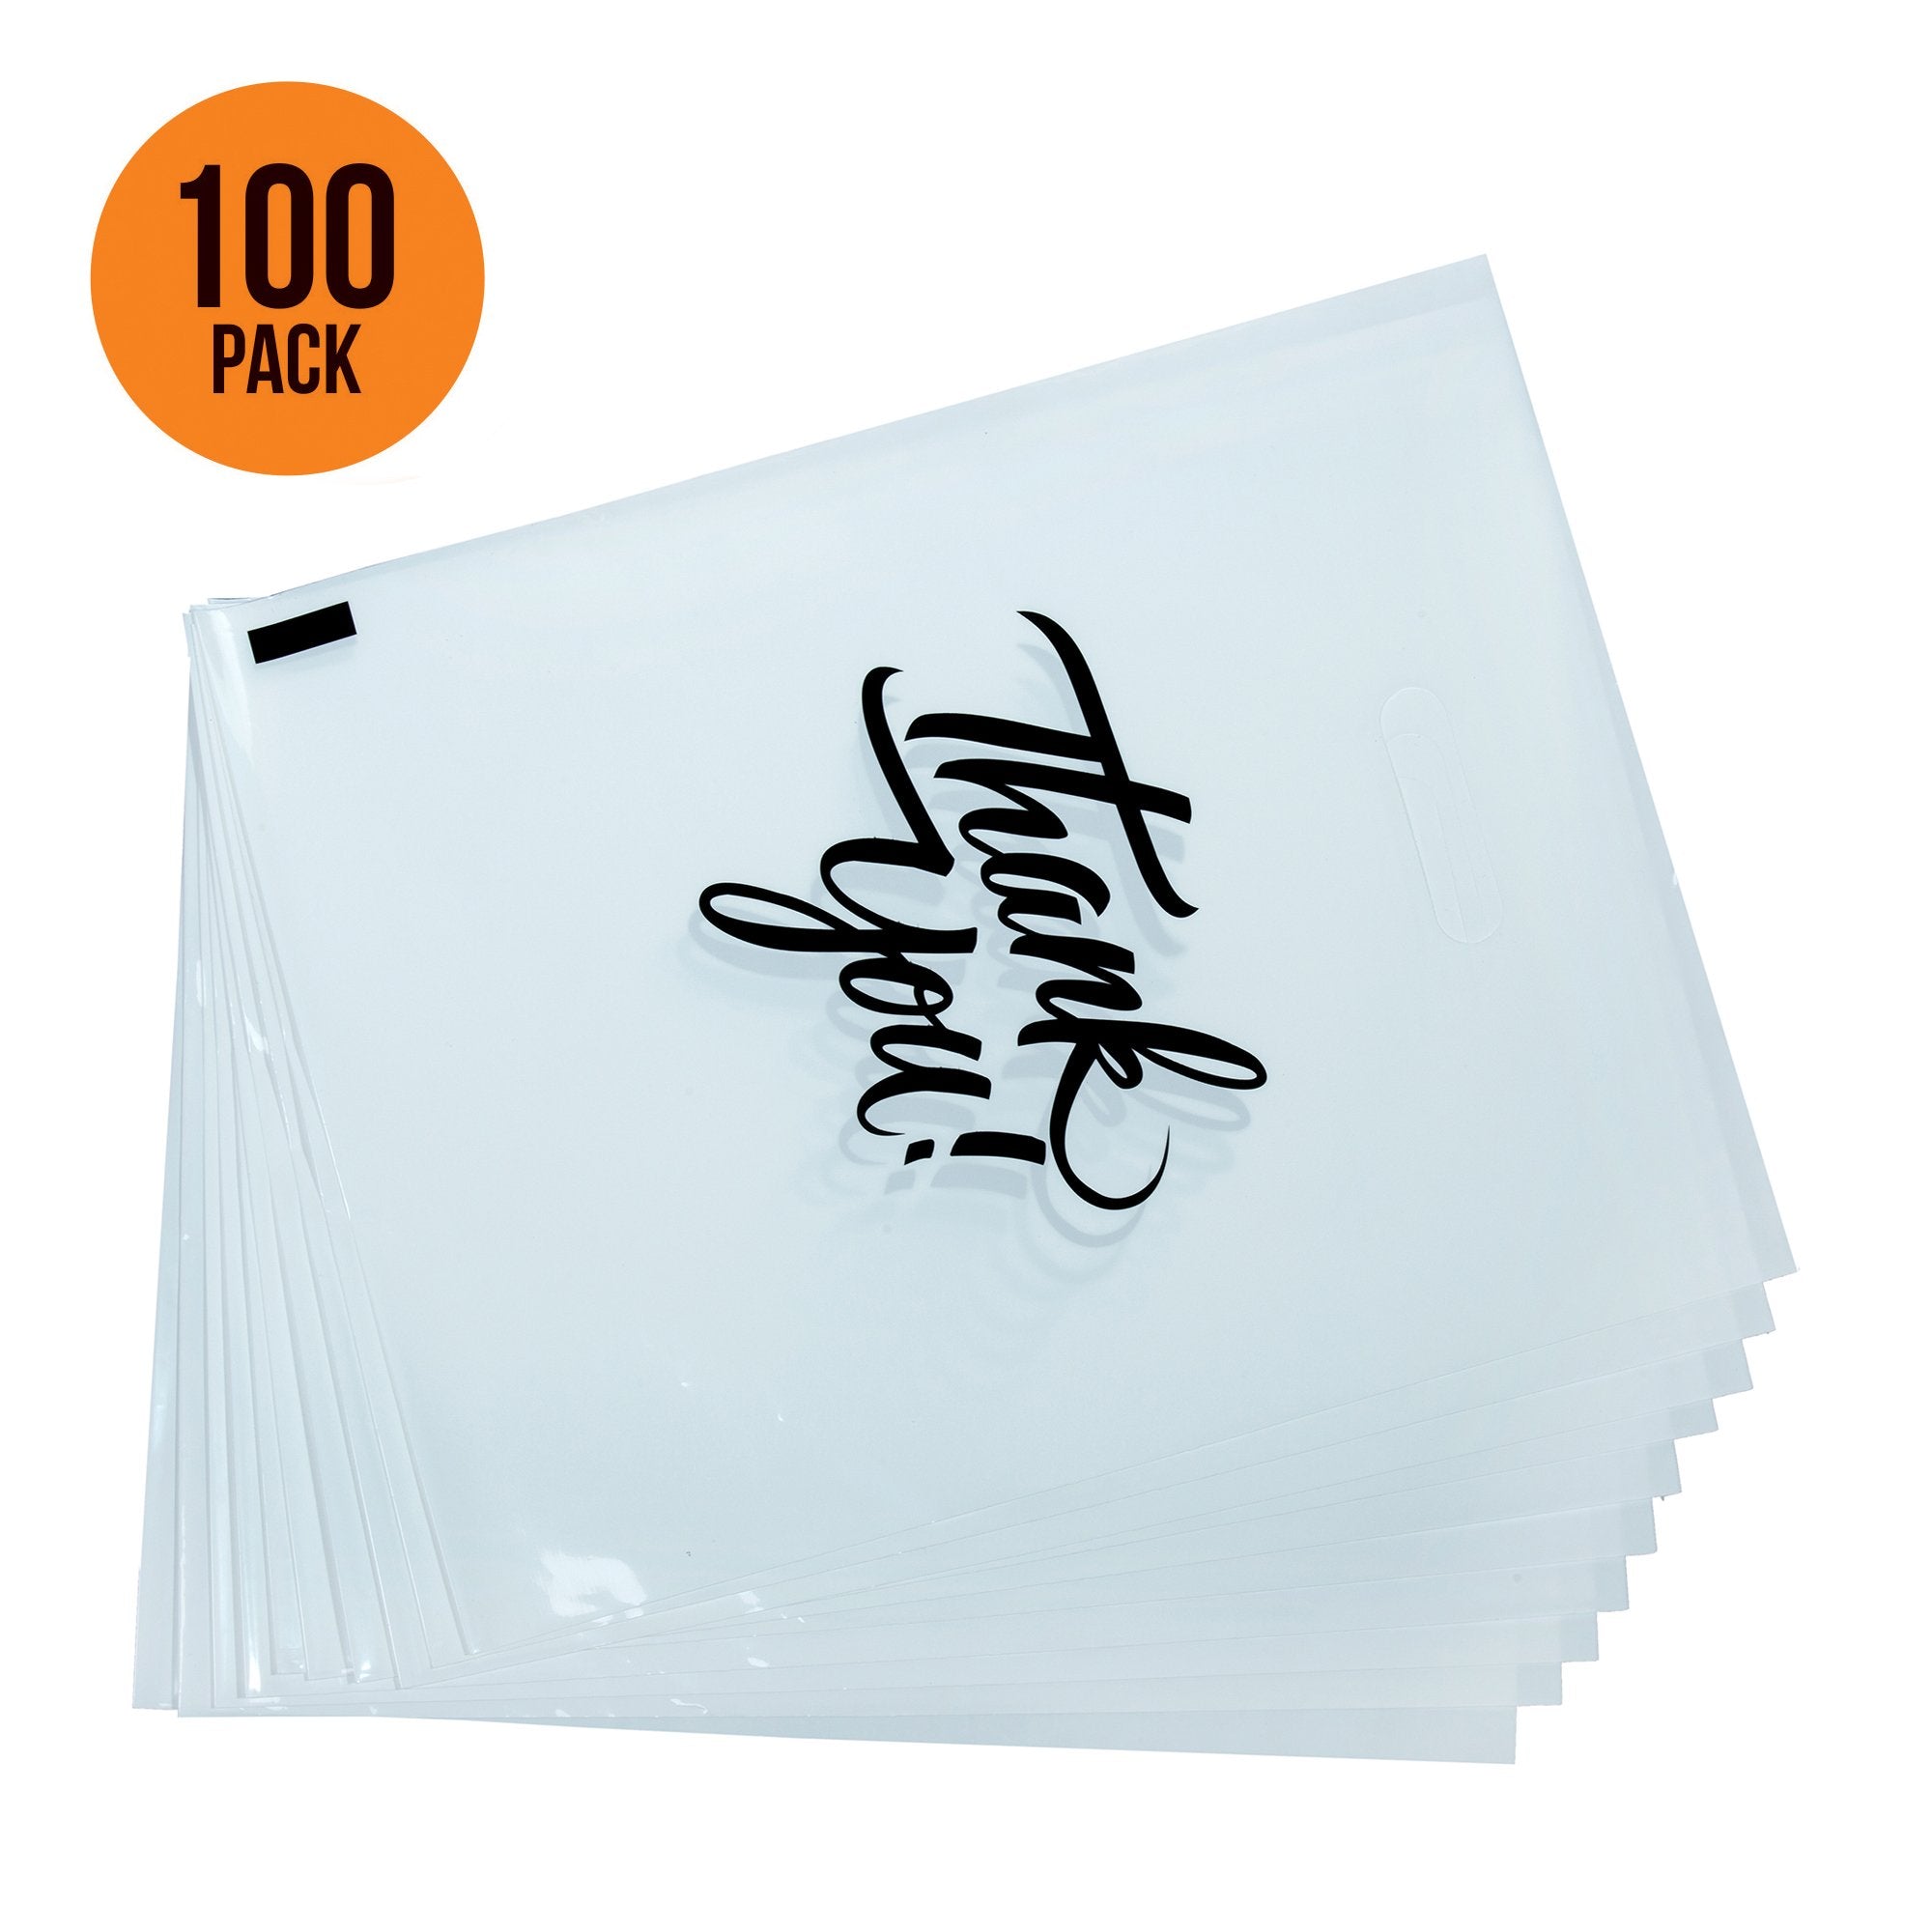 20 X 20 Pack of 100 Thank You Printed Merchandise Bags 2 Mil With Die Cut Handle - Infinite Pack